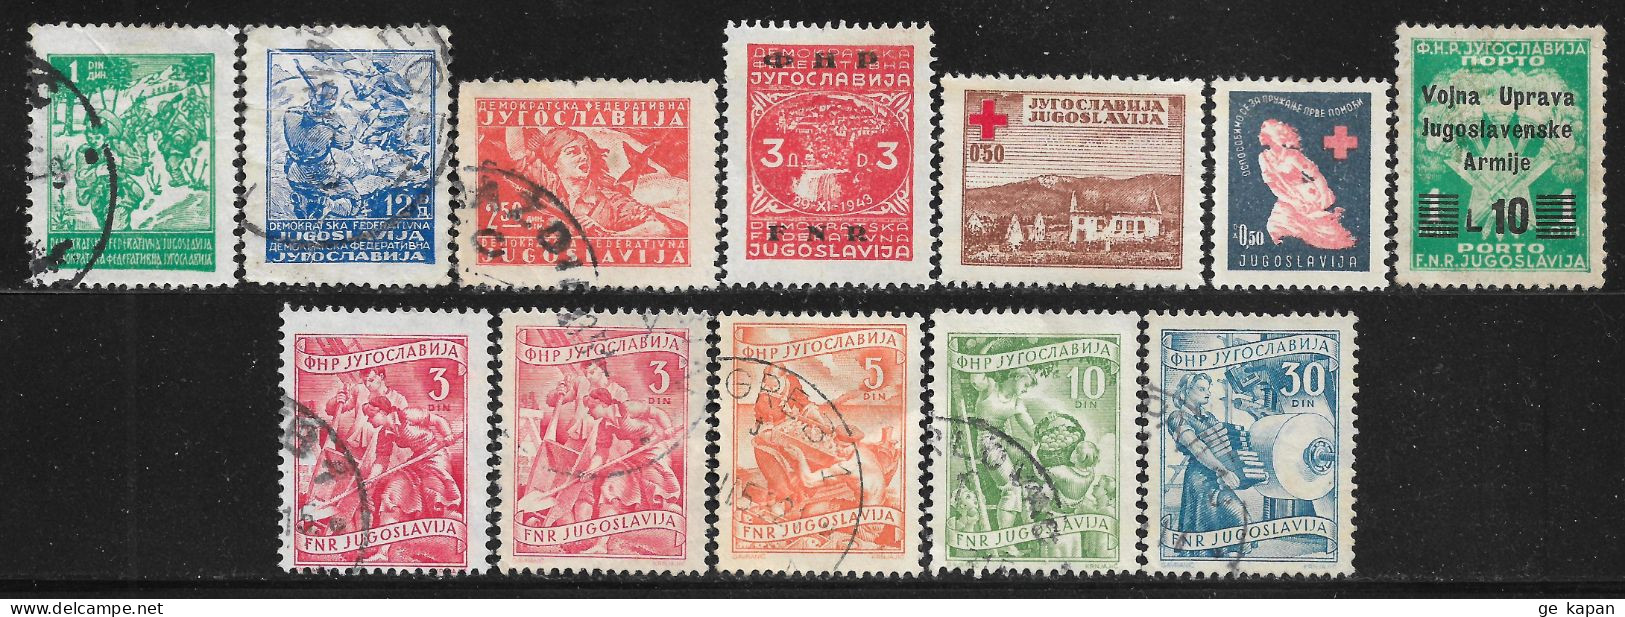 1945-1952 YUGOSLAVIA Set Of 8 Used + 4 MLH Stamps (Scott # 174,182,211,277,RA5,RA6,J23,308,345,346,350) CV $3.00 - Oblitérés